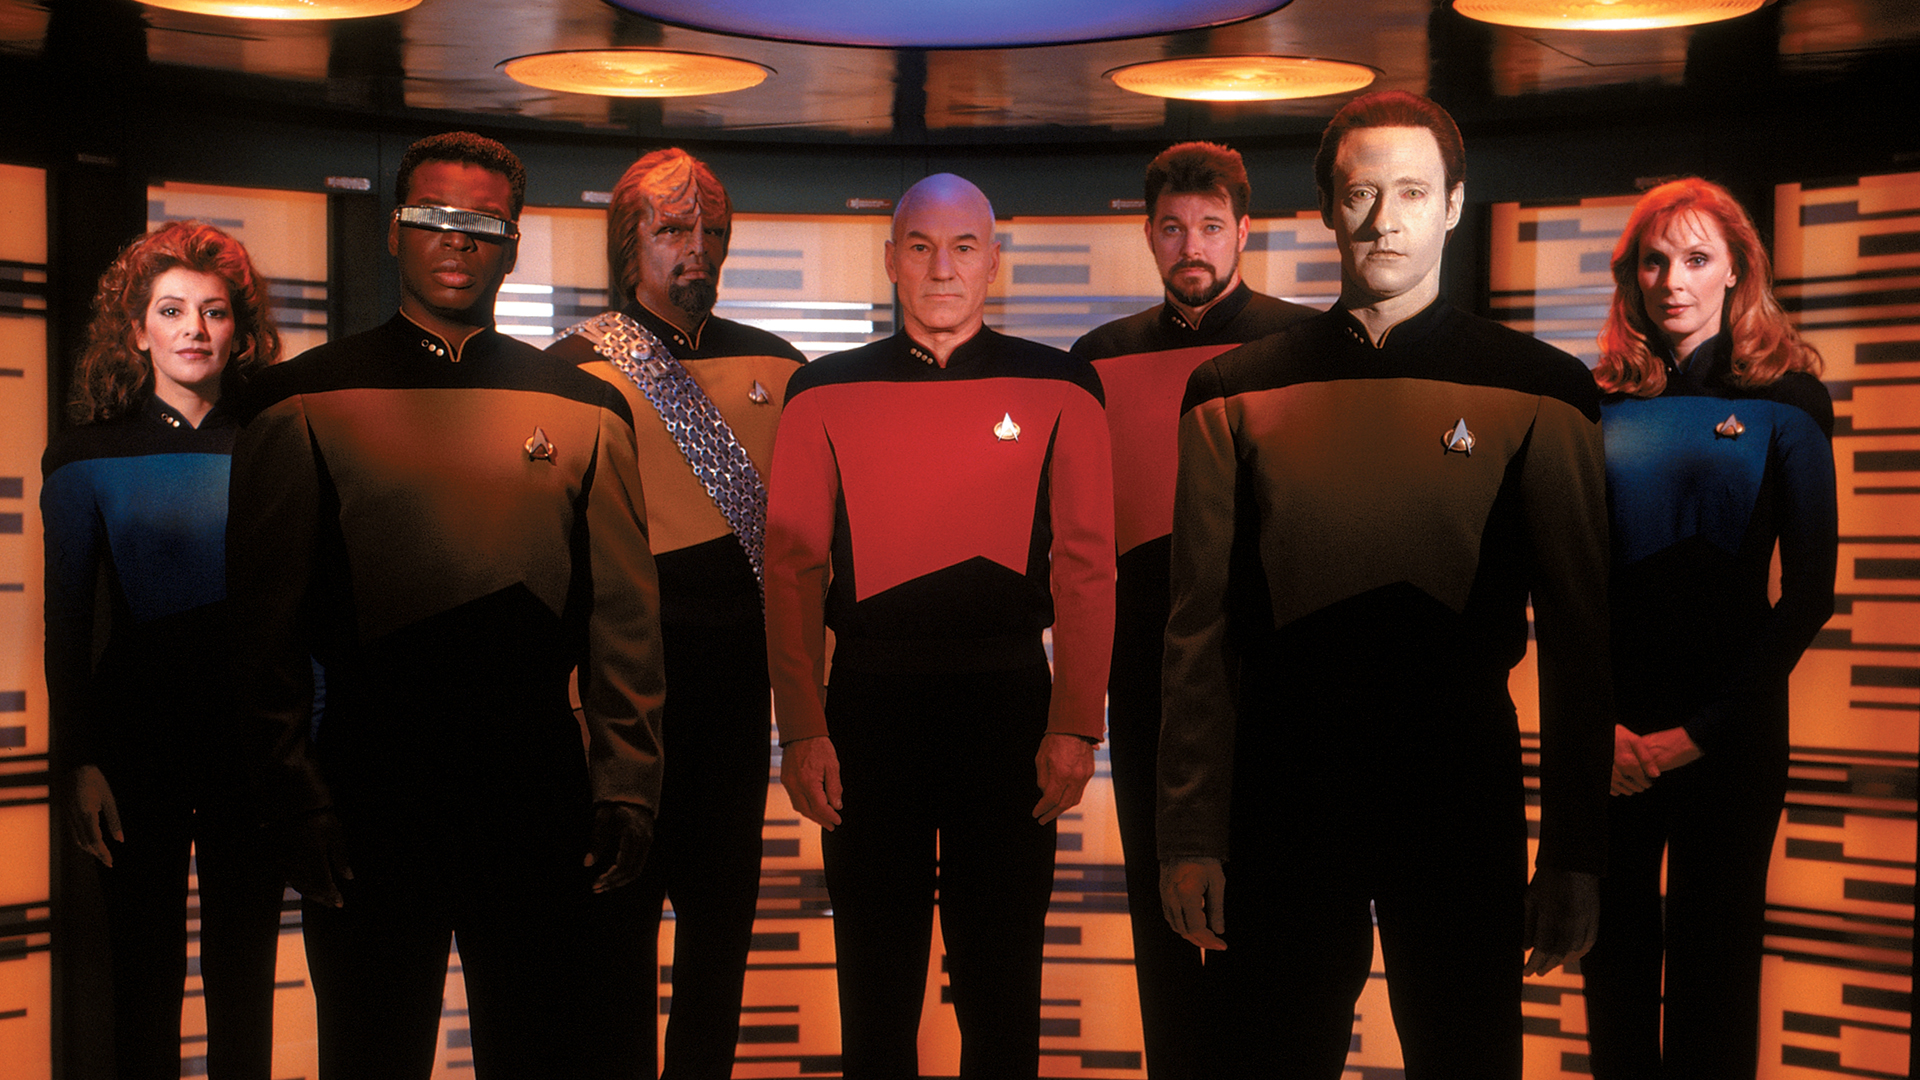 Star Trek: The Next Generation - Watch Free on Pluto TV United States